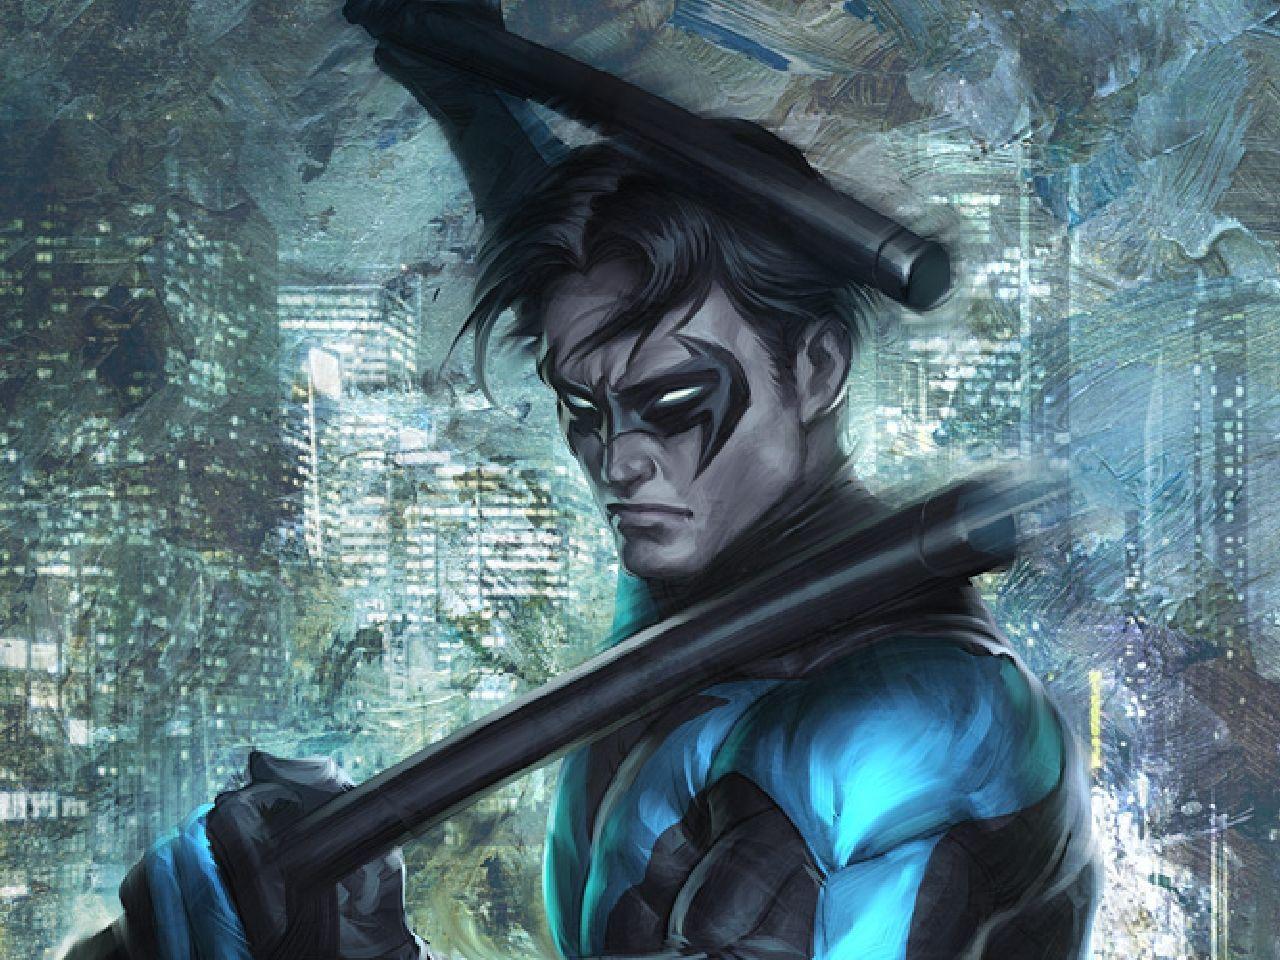 Comics Nightwing Wallpaper. wall. Background image